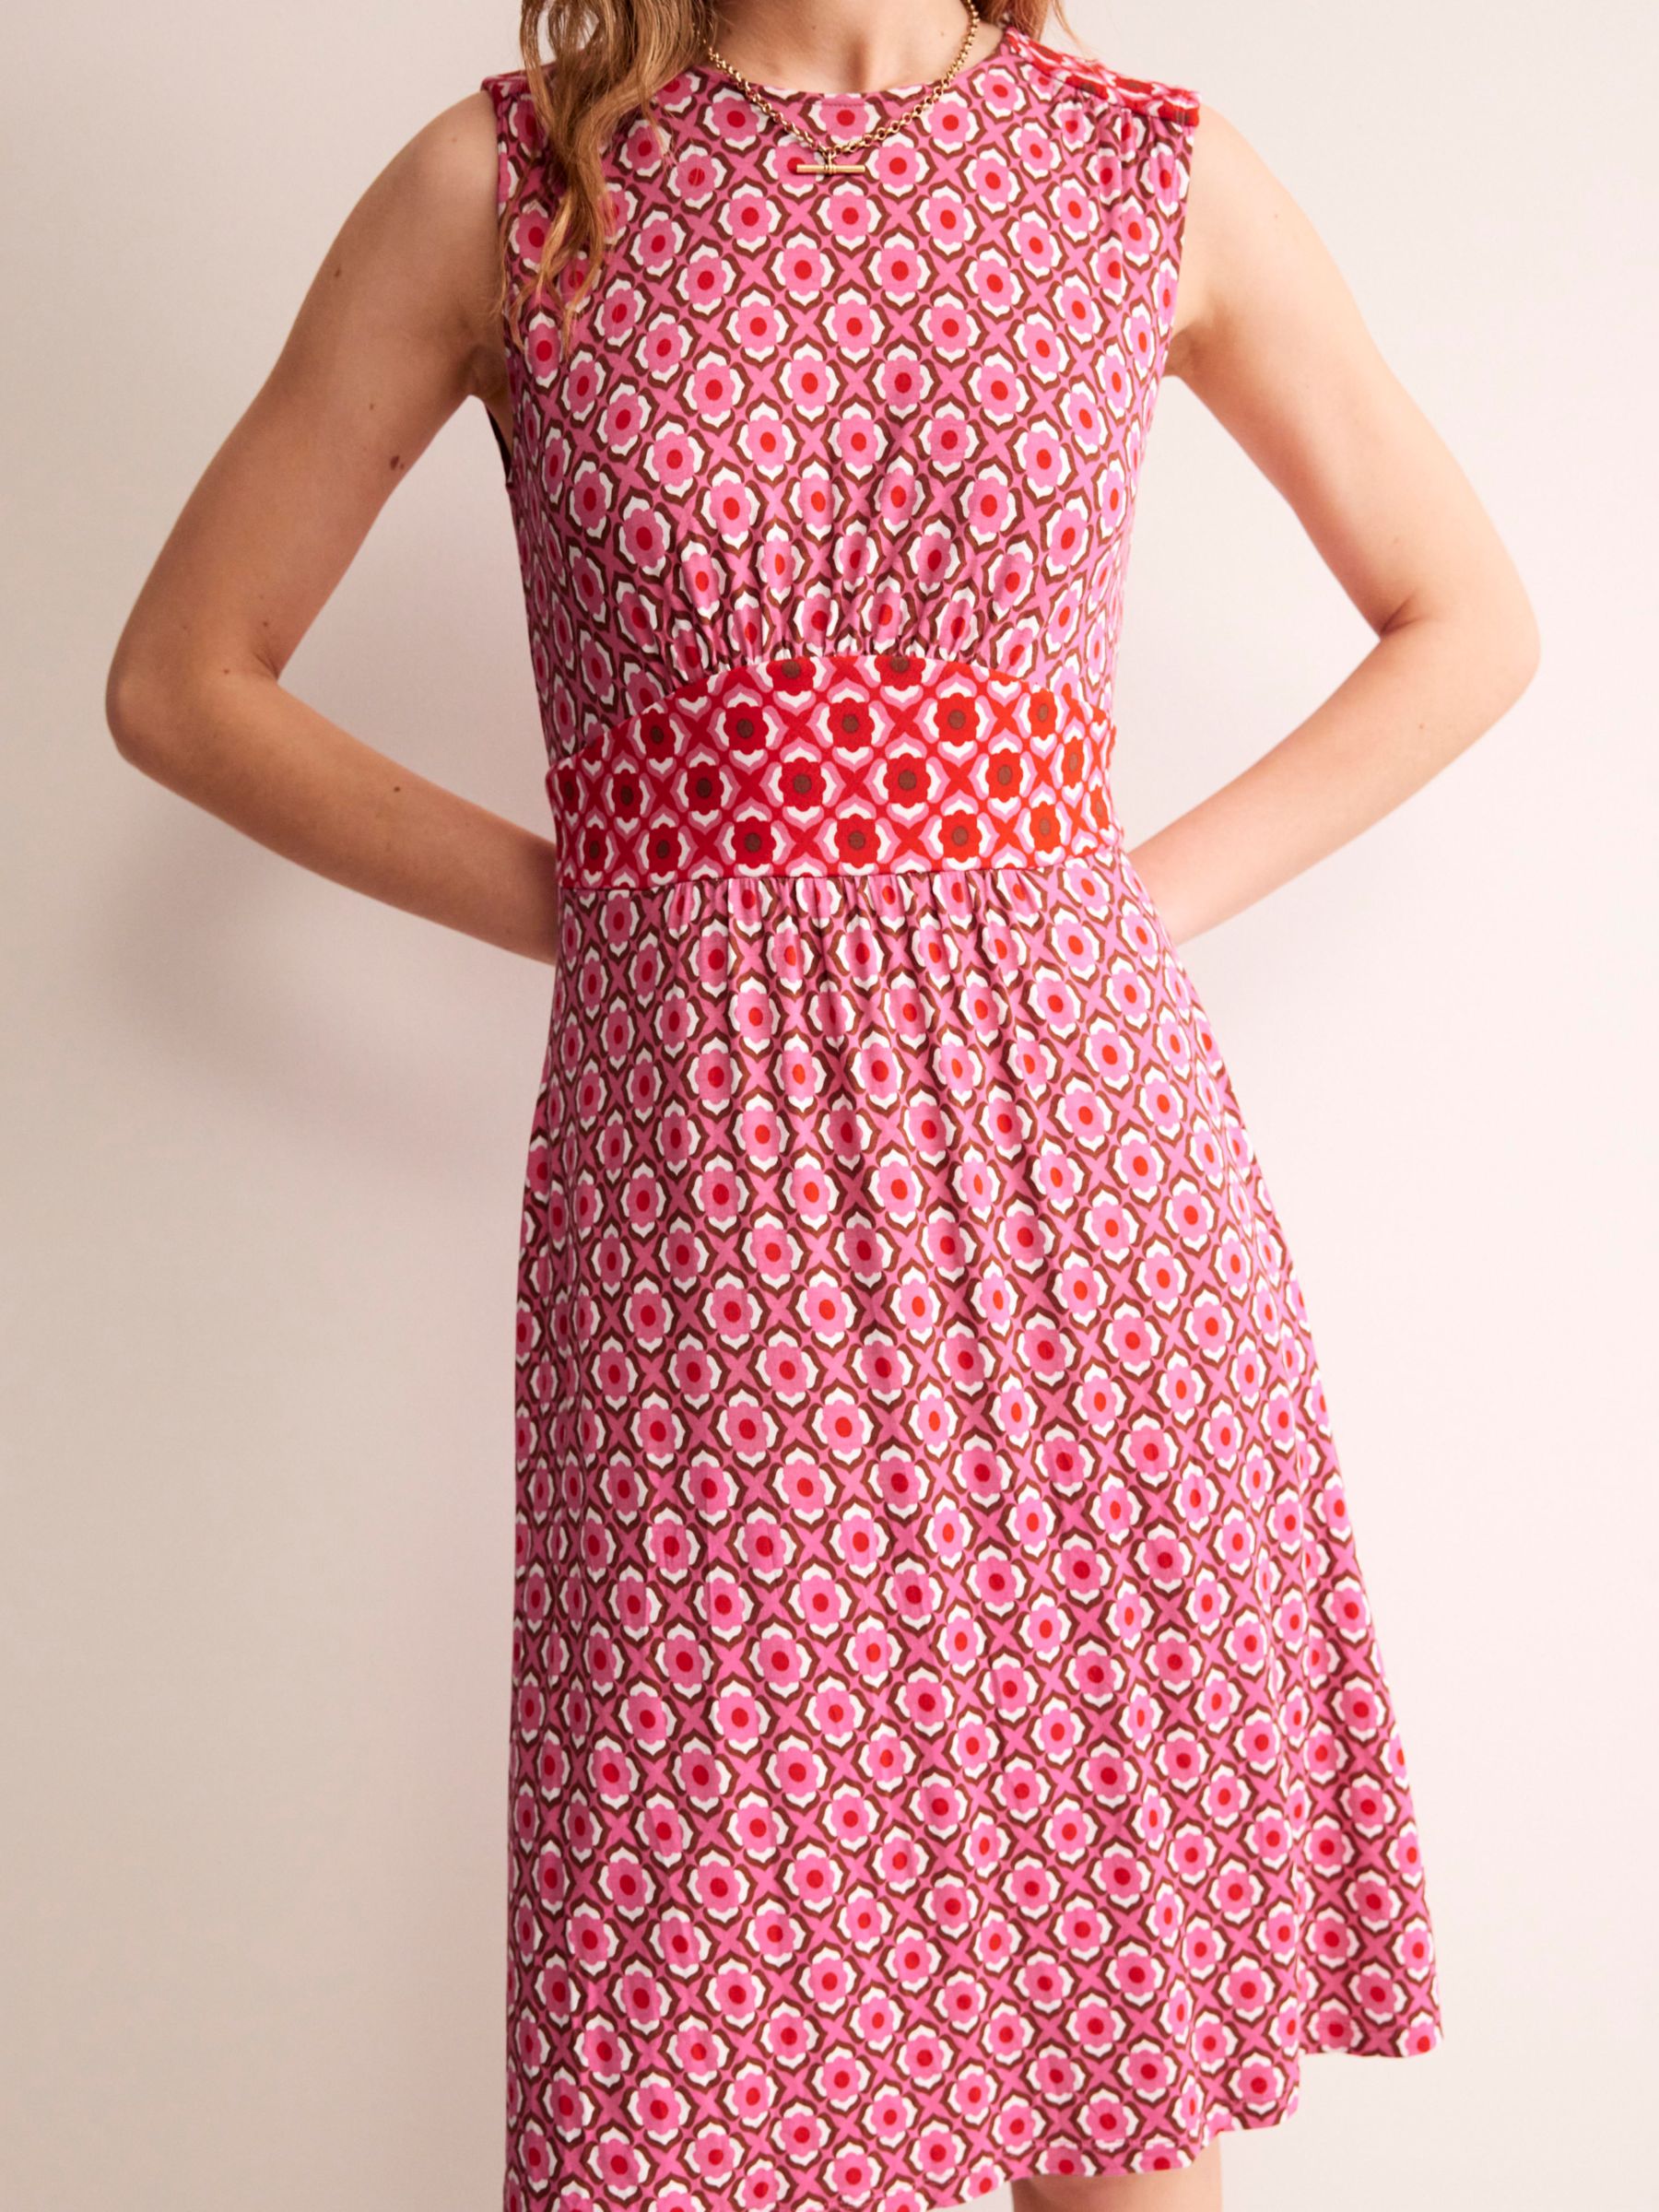 Boden Thea Sleeveless Geometric Print Dress, Sunset, 12